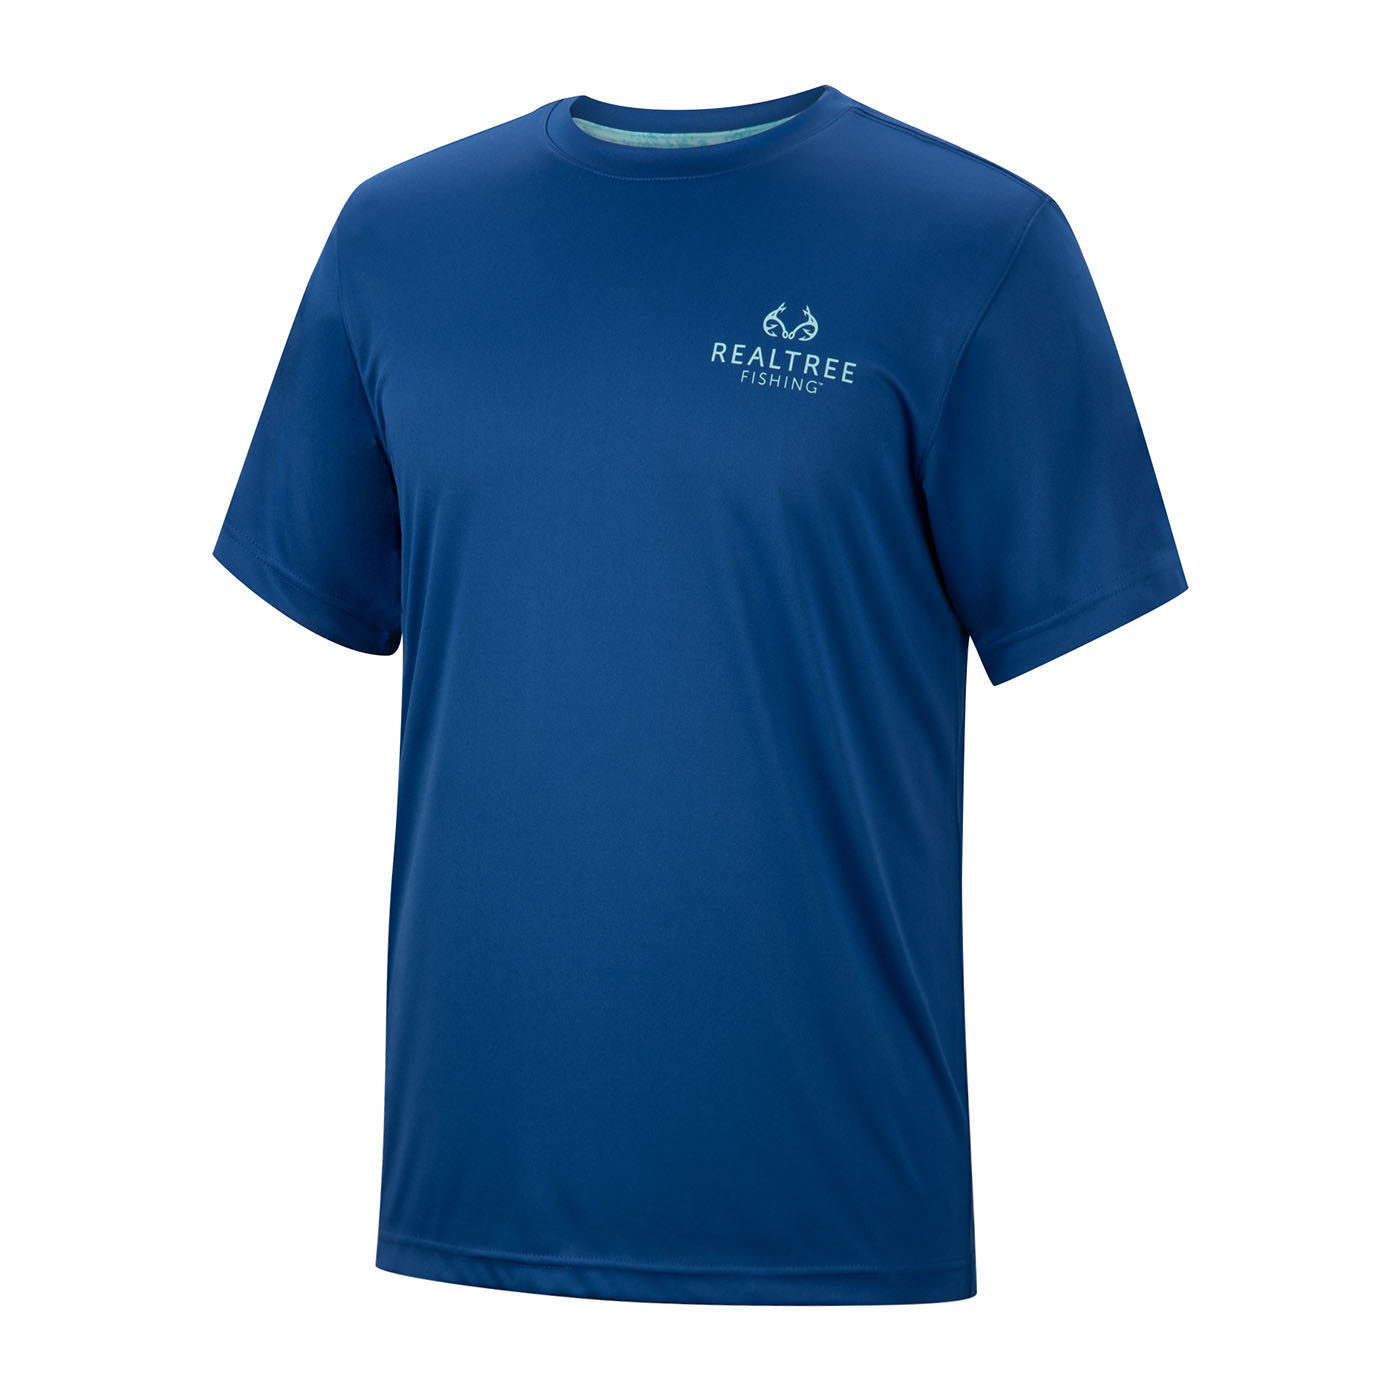 Realtree Men's Fishing shirt Short Sleeve Lightweight UPF 40 Size